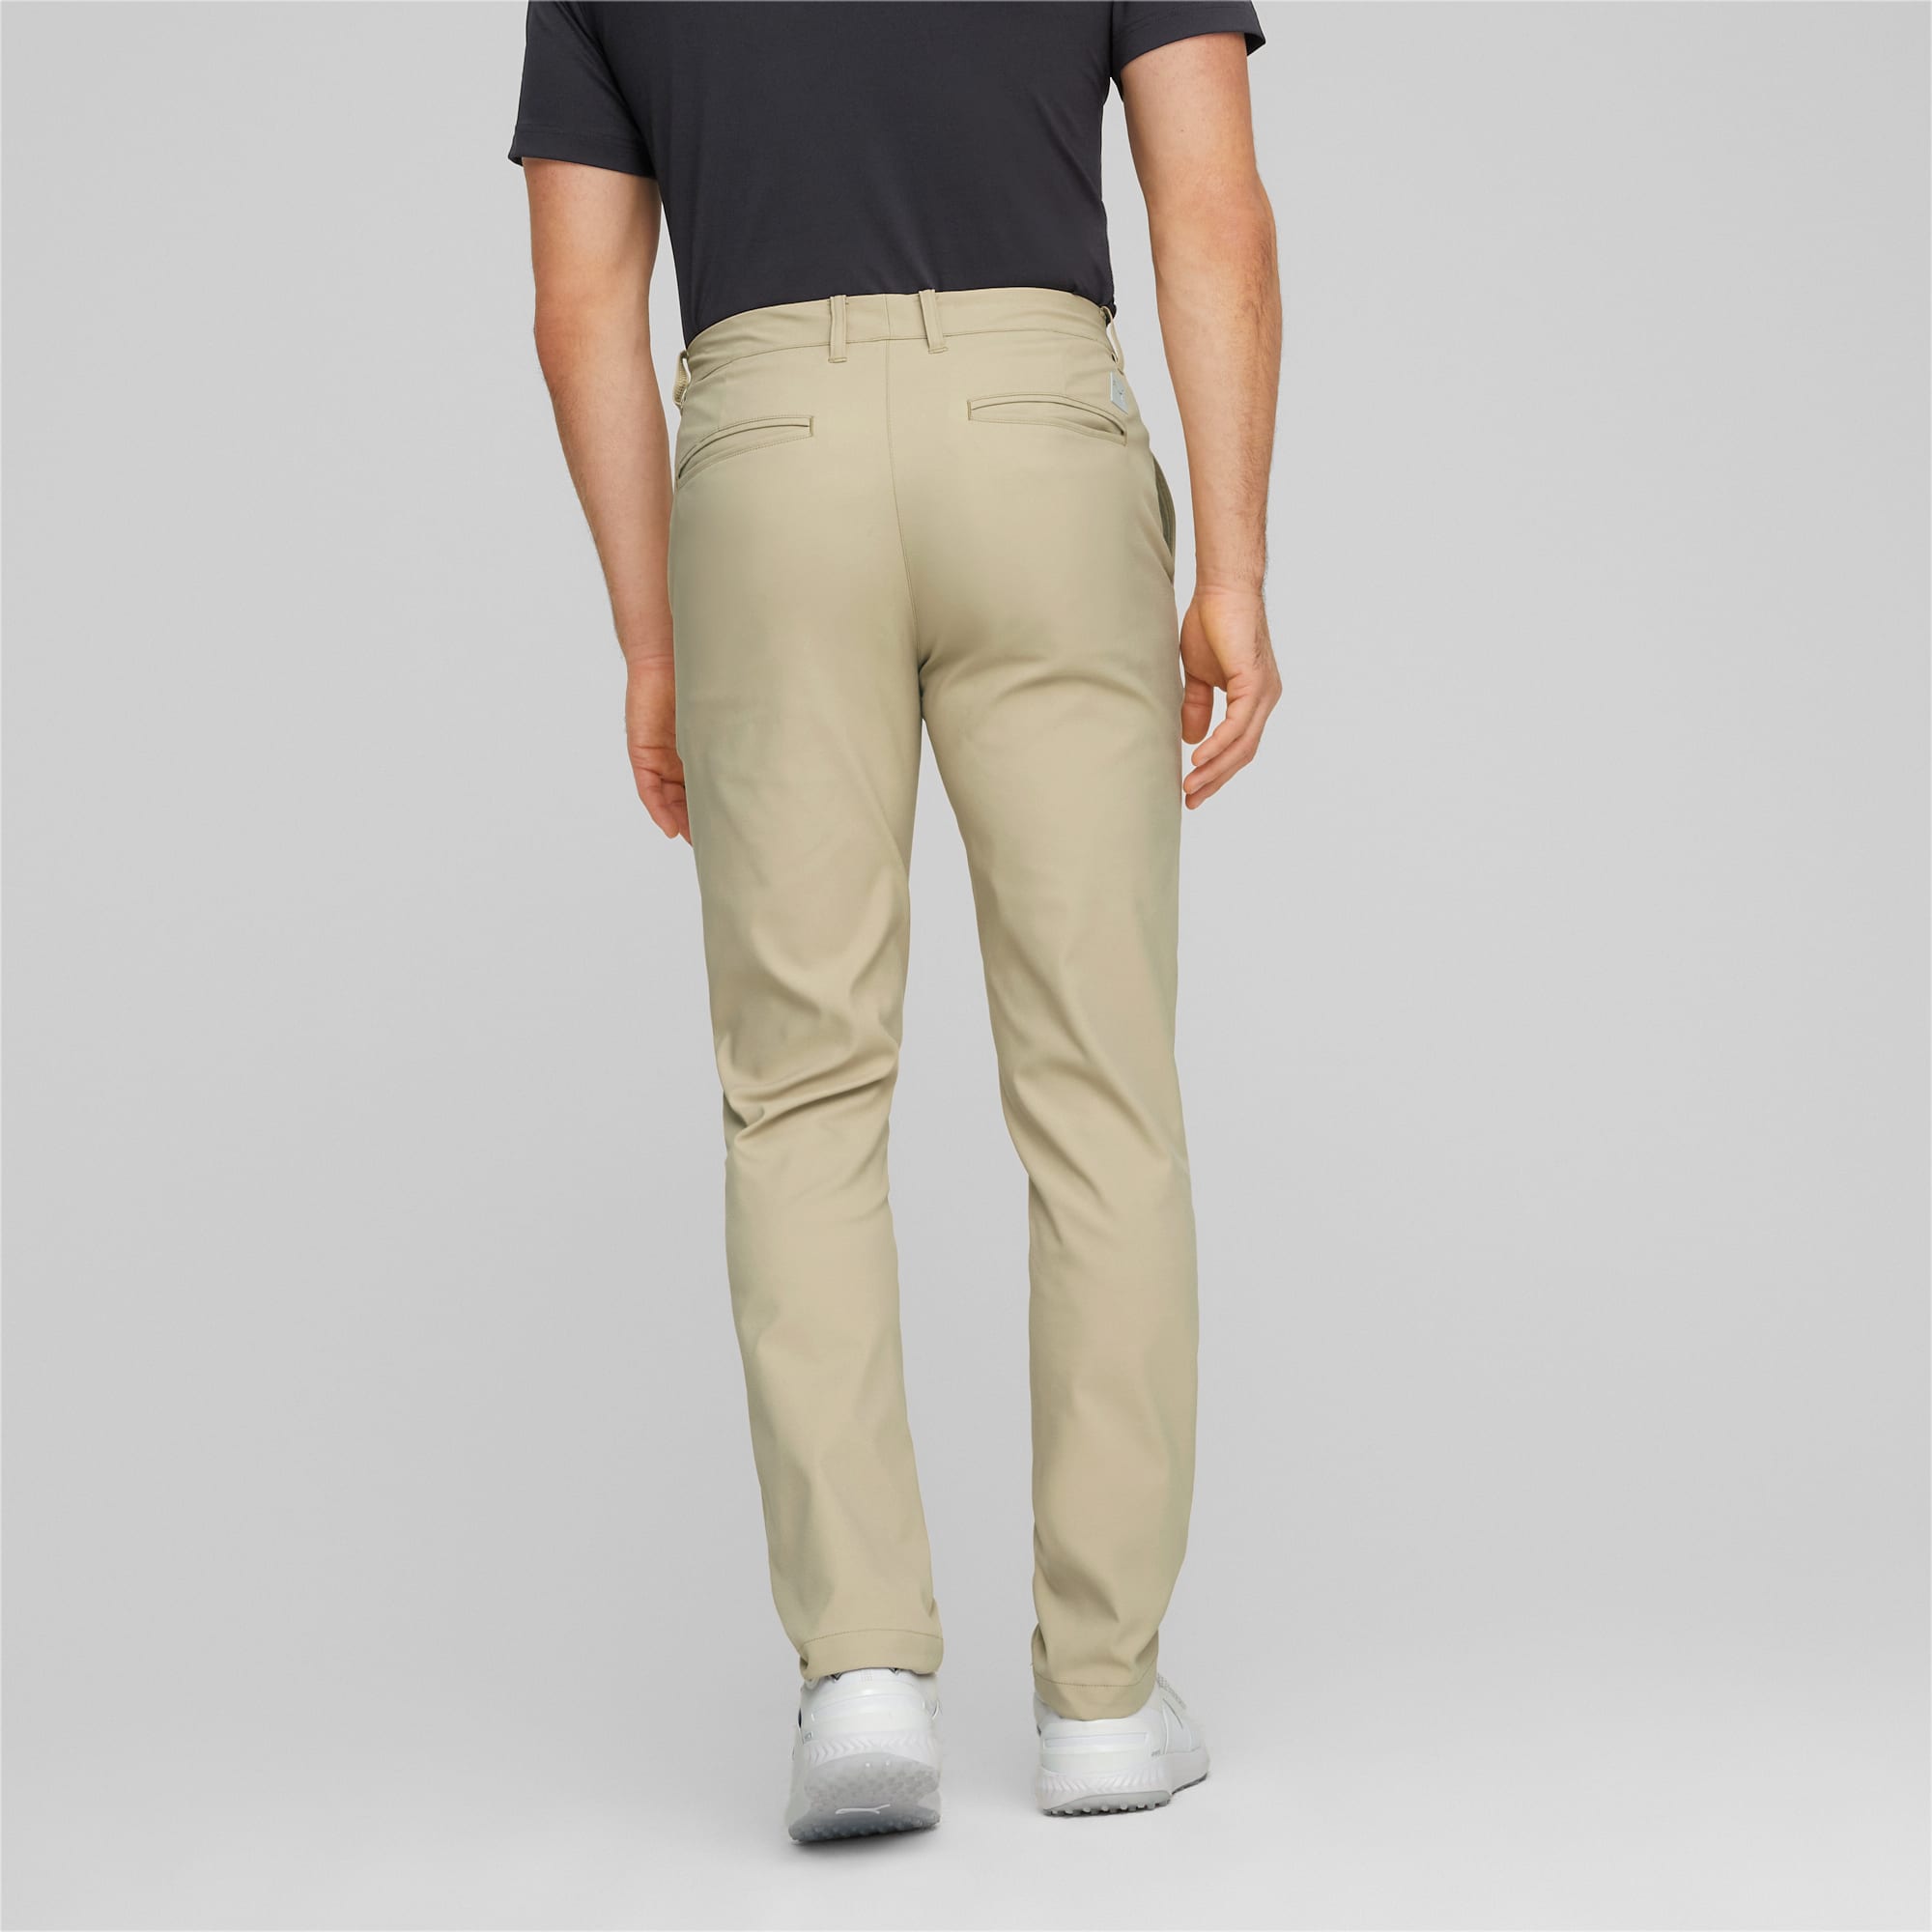 PUMA Dealer Tailored Golf Pants Men, Alabaster, Size 36/36, Clothing